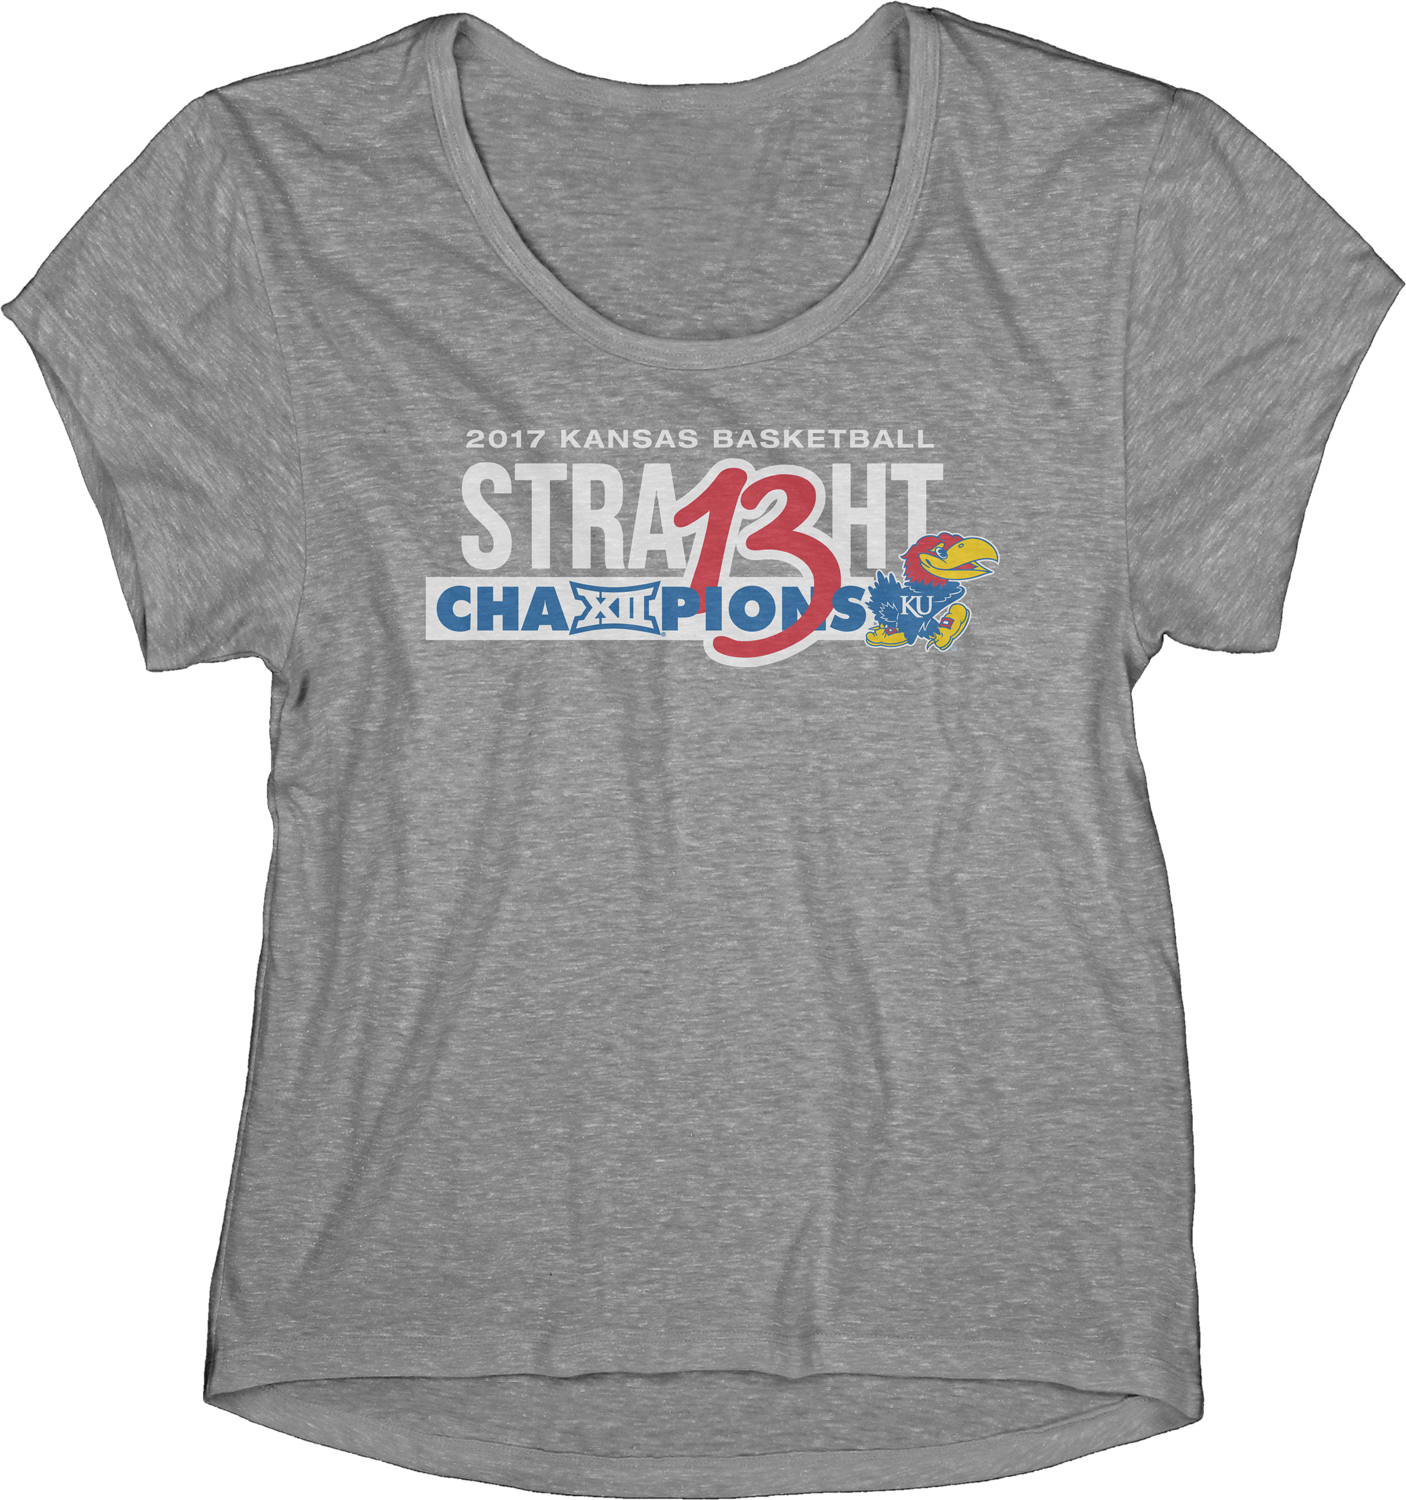 Blue 84 Kansas Jayhawks 13 Straight Basketball Big 12 Champion WOMEN Gray T-Shirt